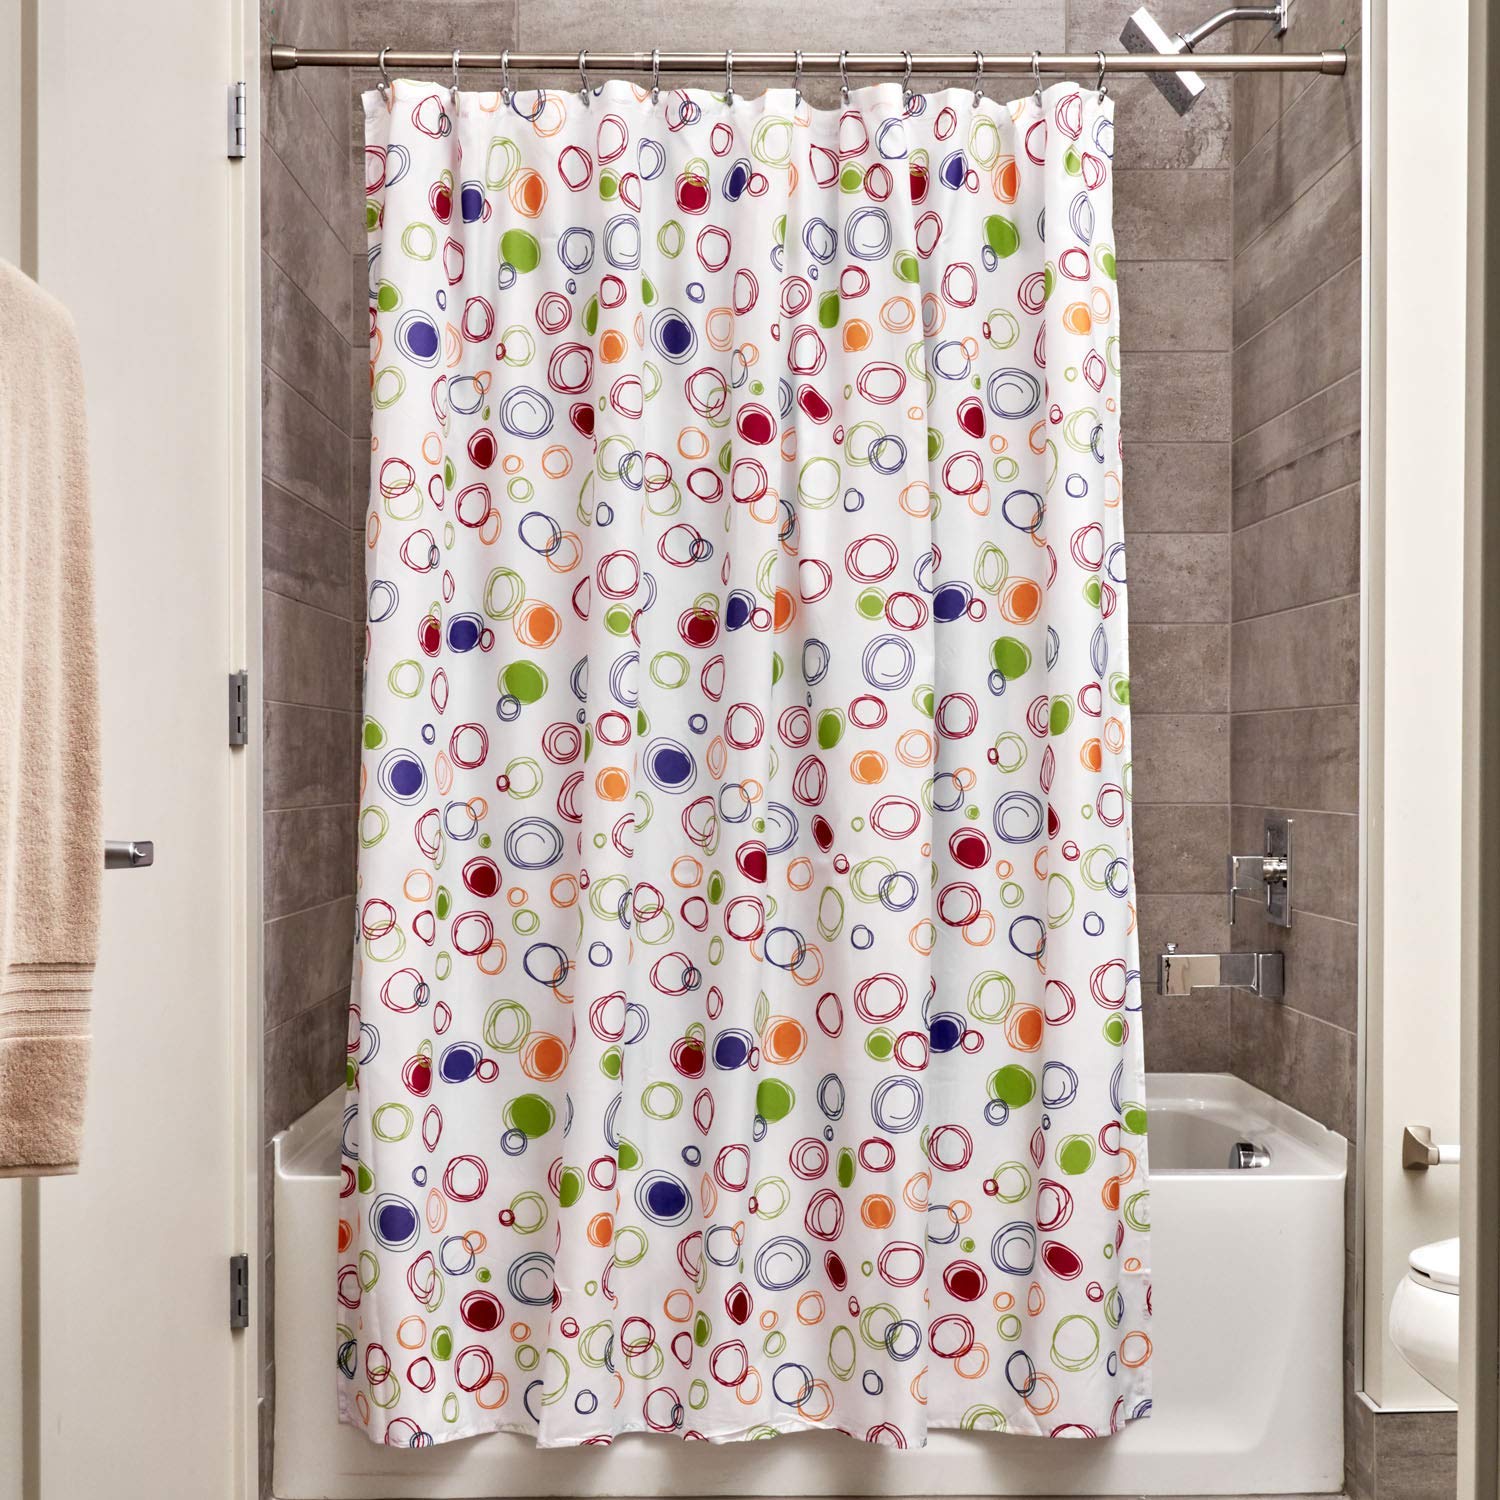 iDesign Multi-Colored Fabric Doodle Shower Curtain